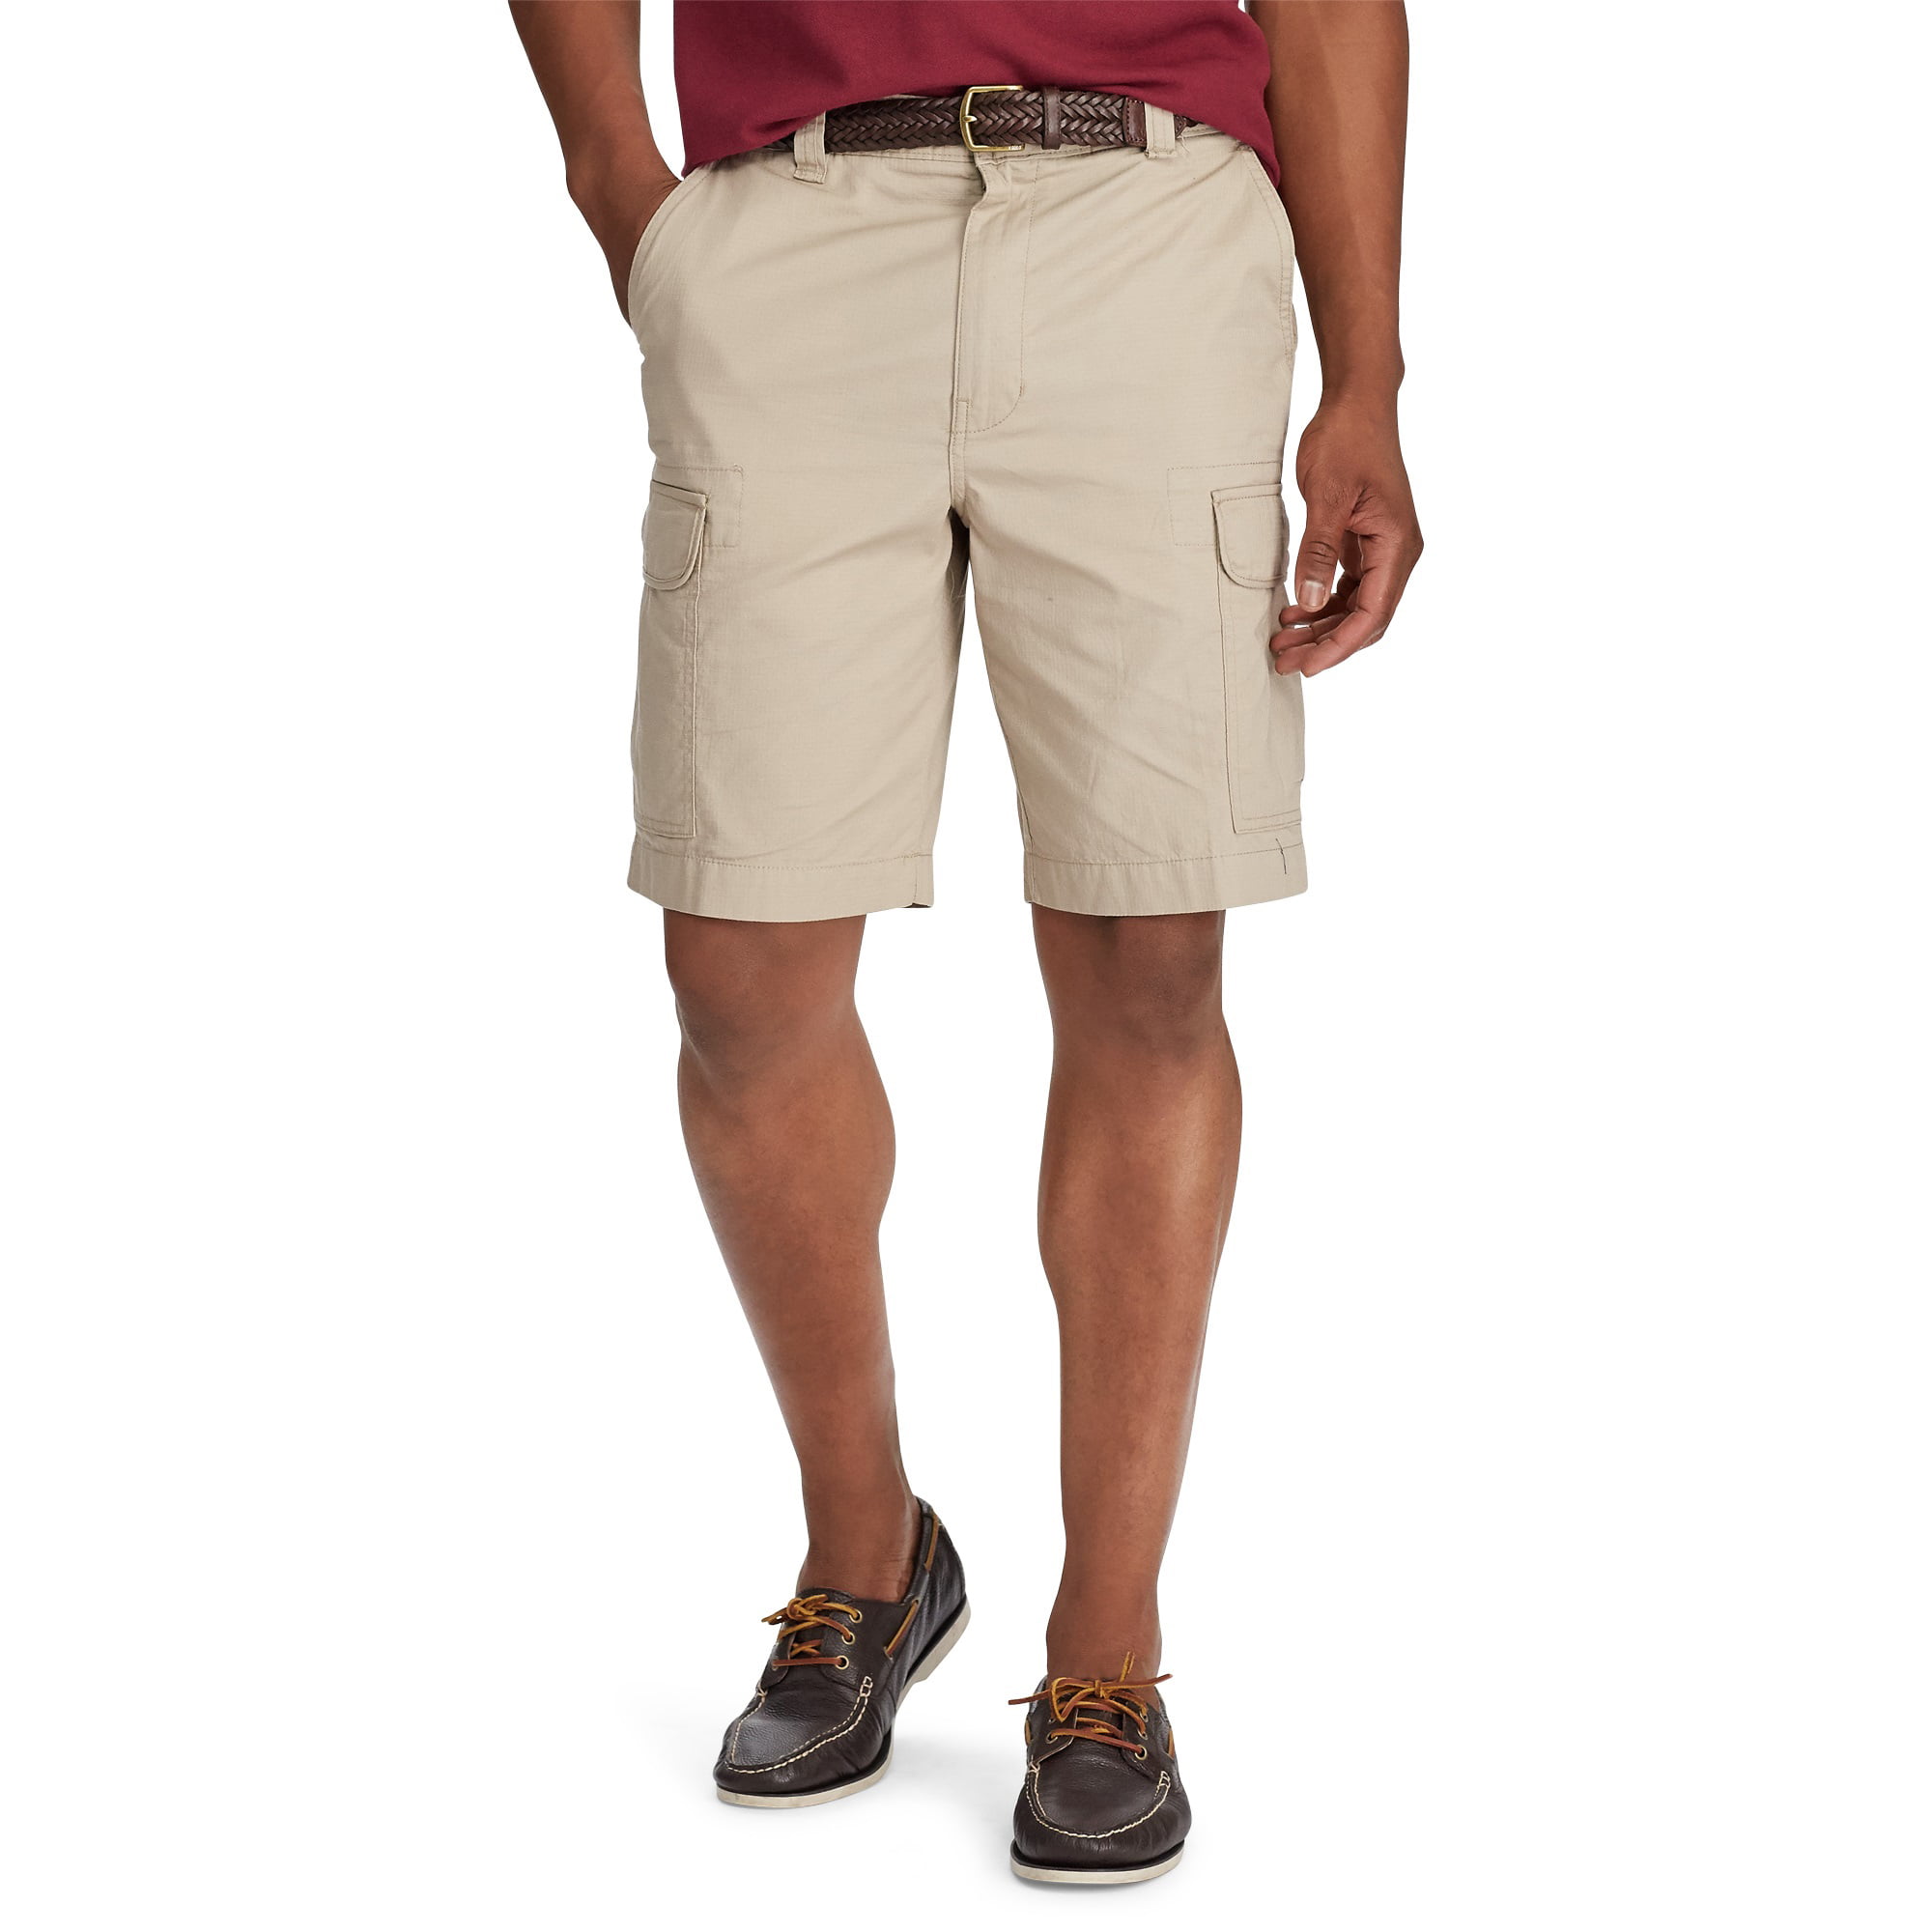 Chaps - Chaps Men's Ripstop Cargo Shorts - Walmart.com - Walmart.com